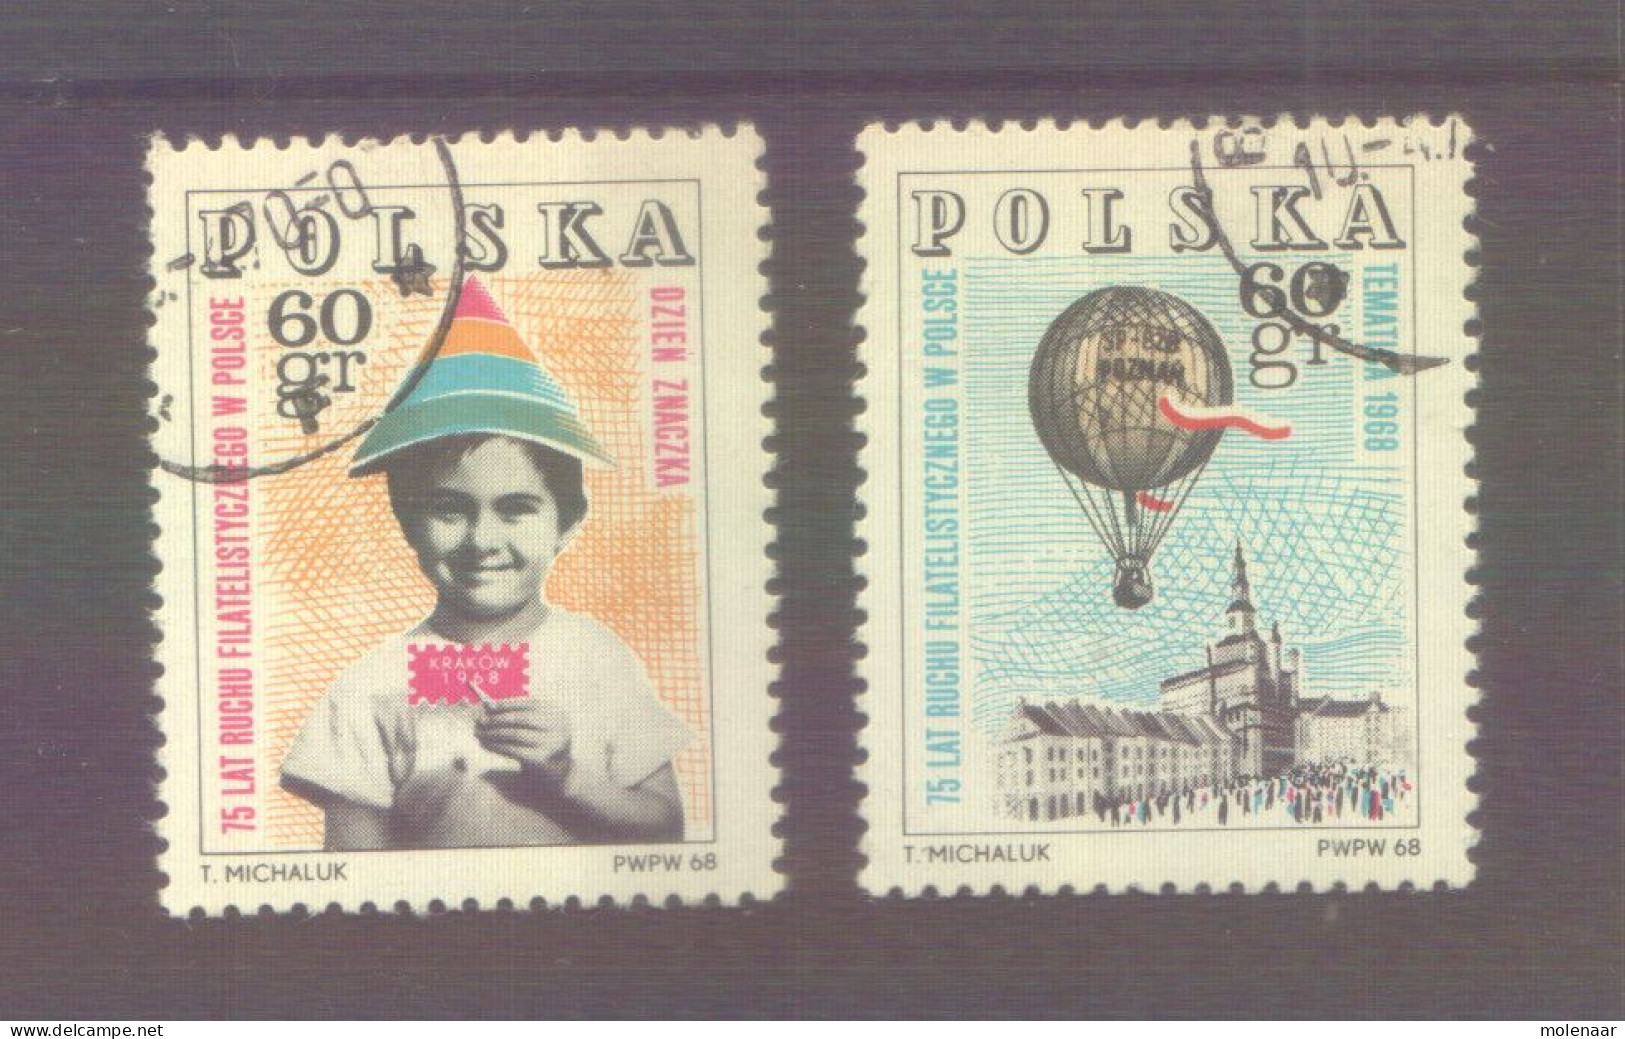 Postzegels > Europa > Polen > 1944-.... Republiek > 1961-70 > Gebruikt No. 1814-1846 (12013) - Gebraucht